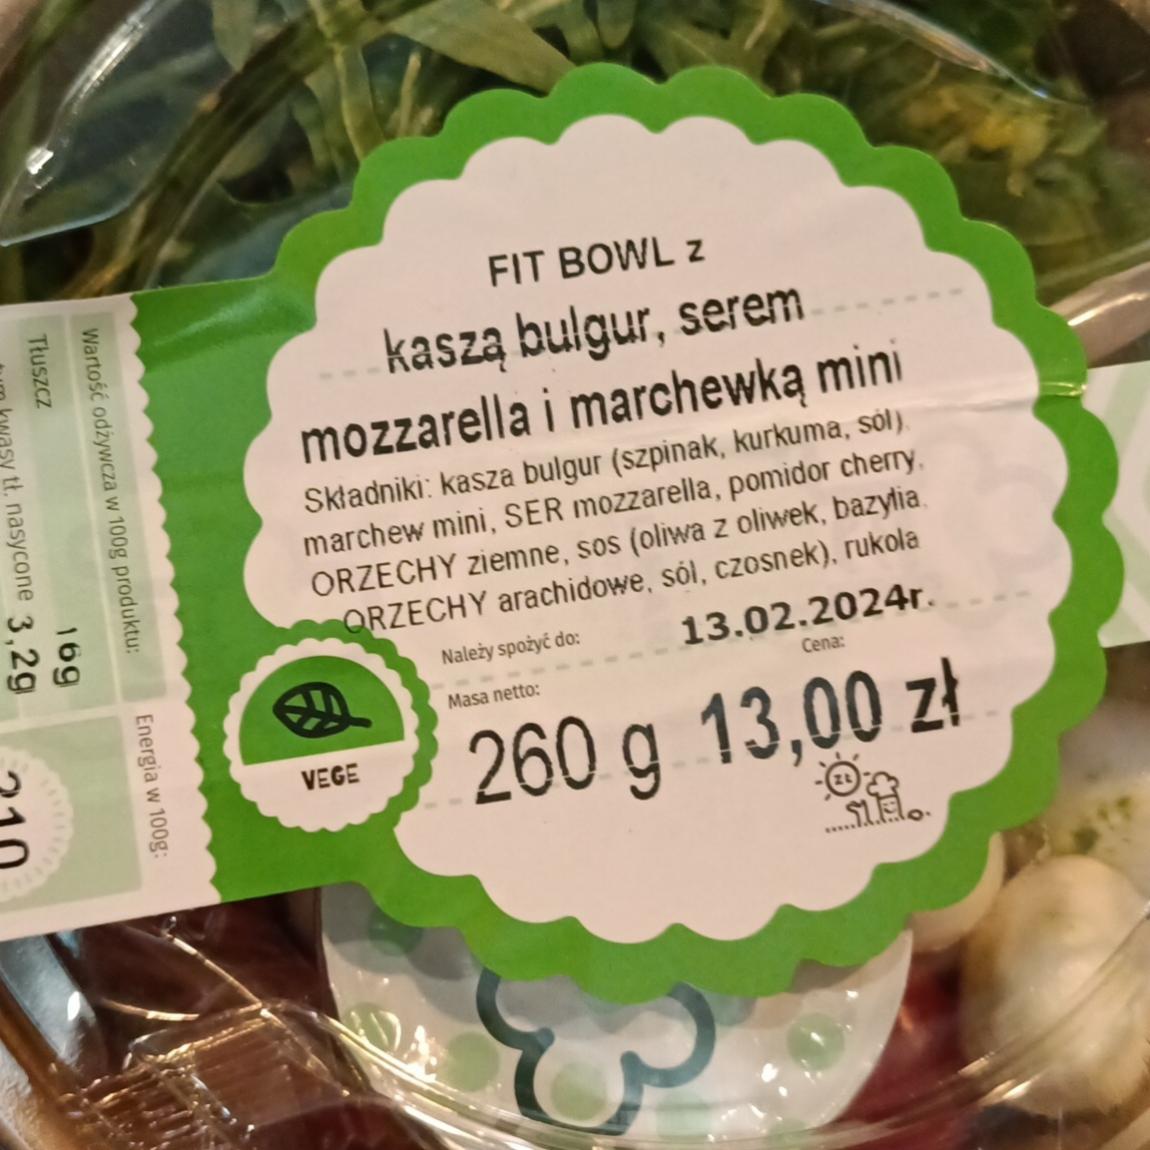 Zdjęcia - Fitbowl z kaszą bulgur serem mozzarella i marchewką mini Ślimak